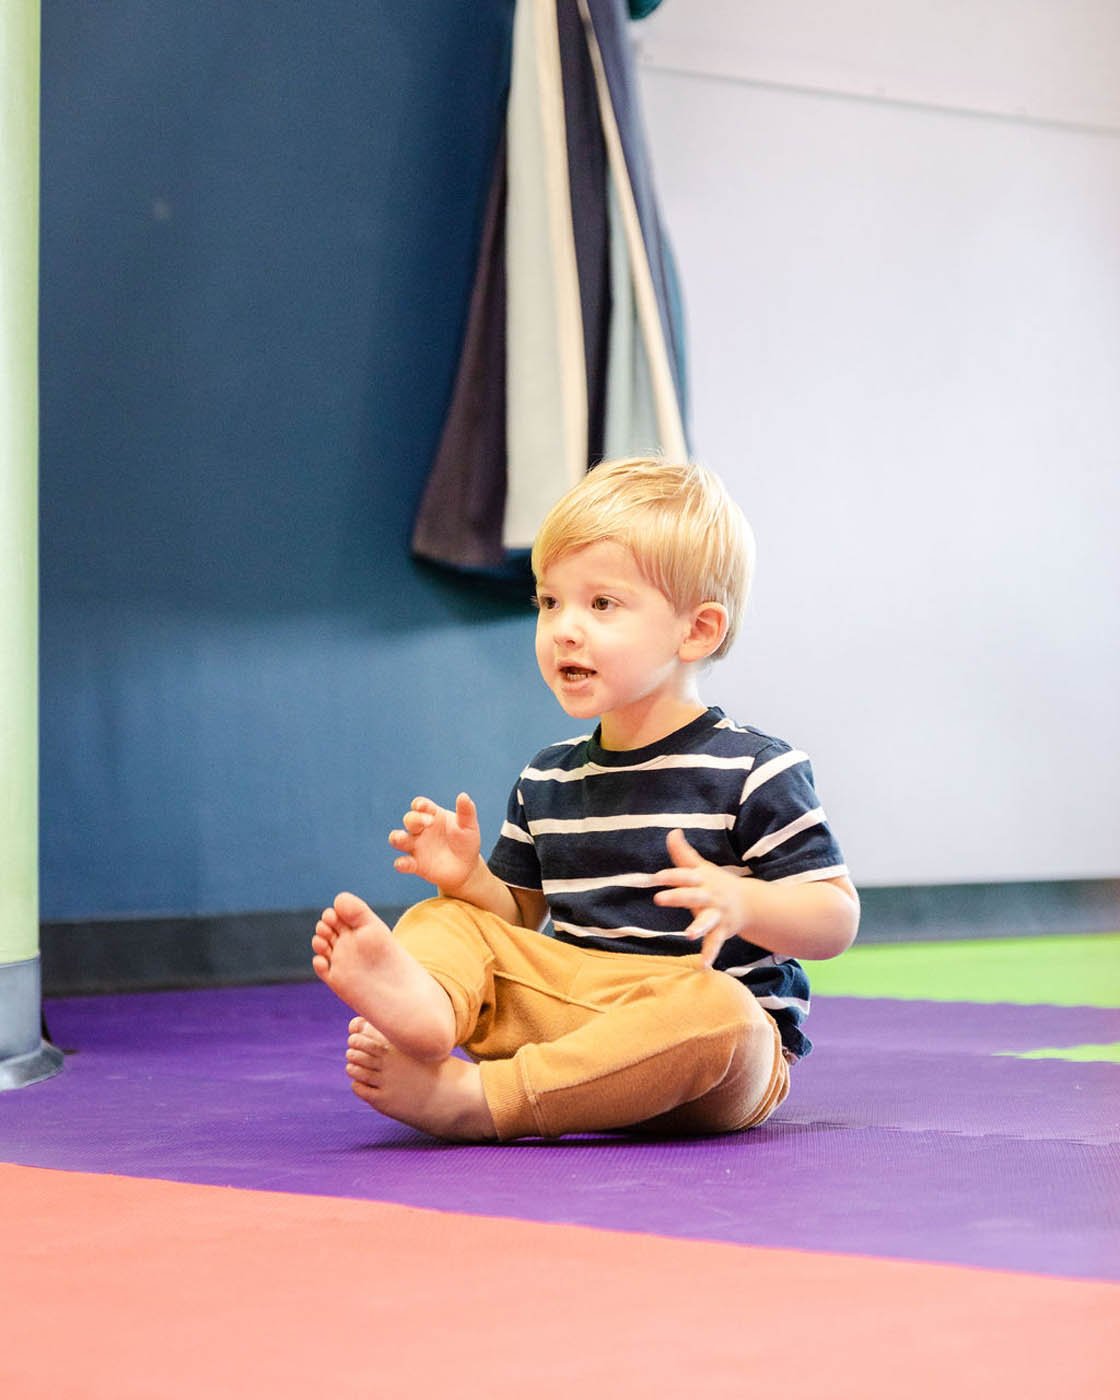 A boy at Romp n' Roll enjoying the sensory gym in Wethersfield, CT.